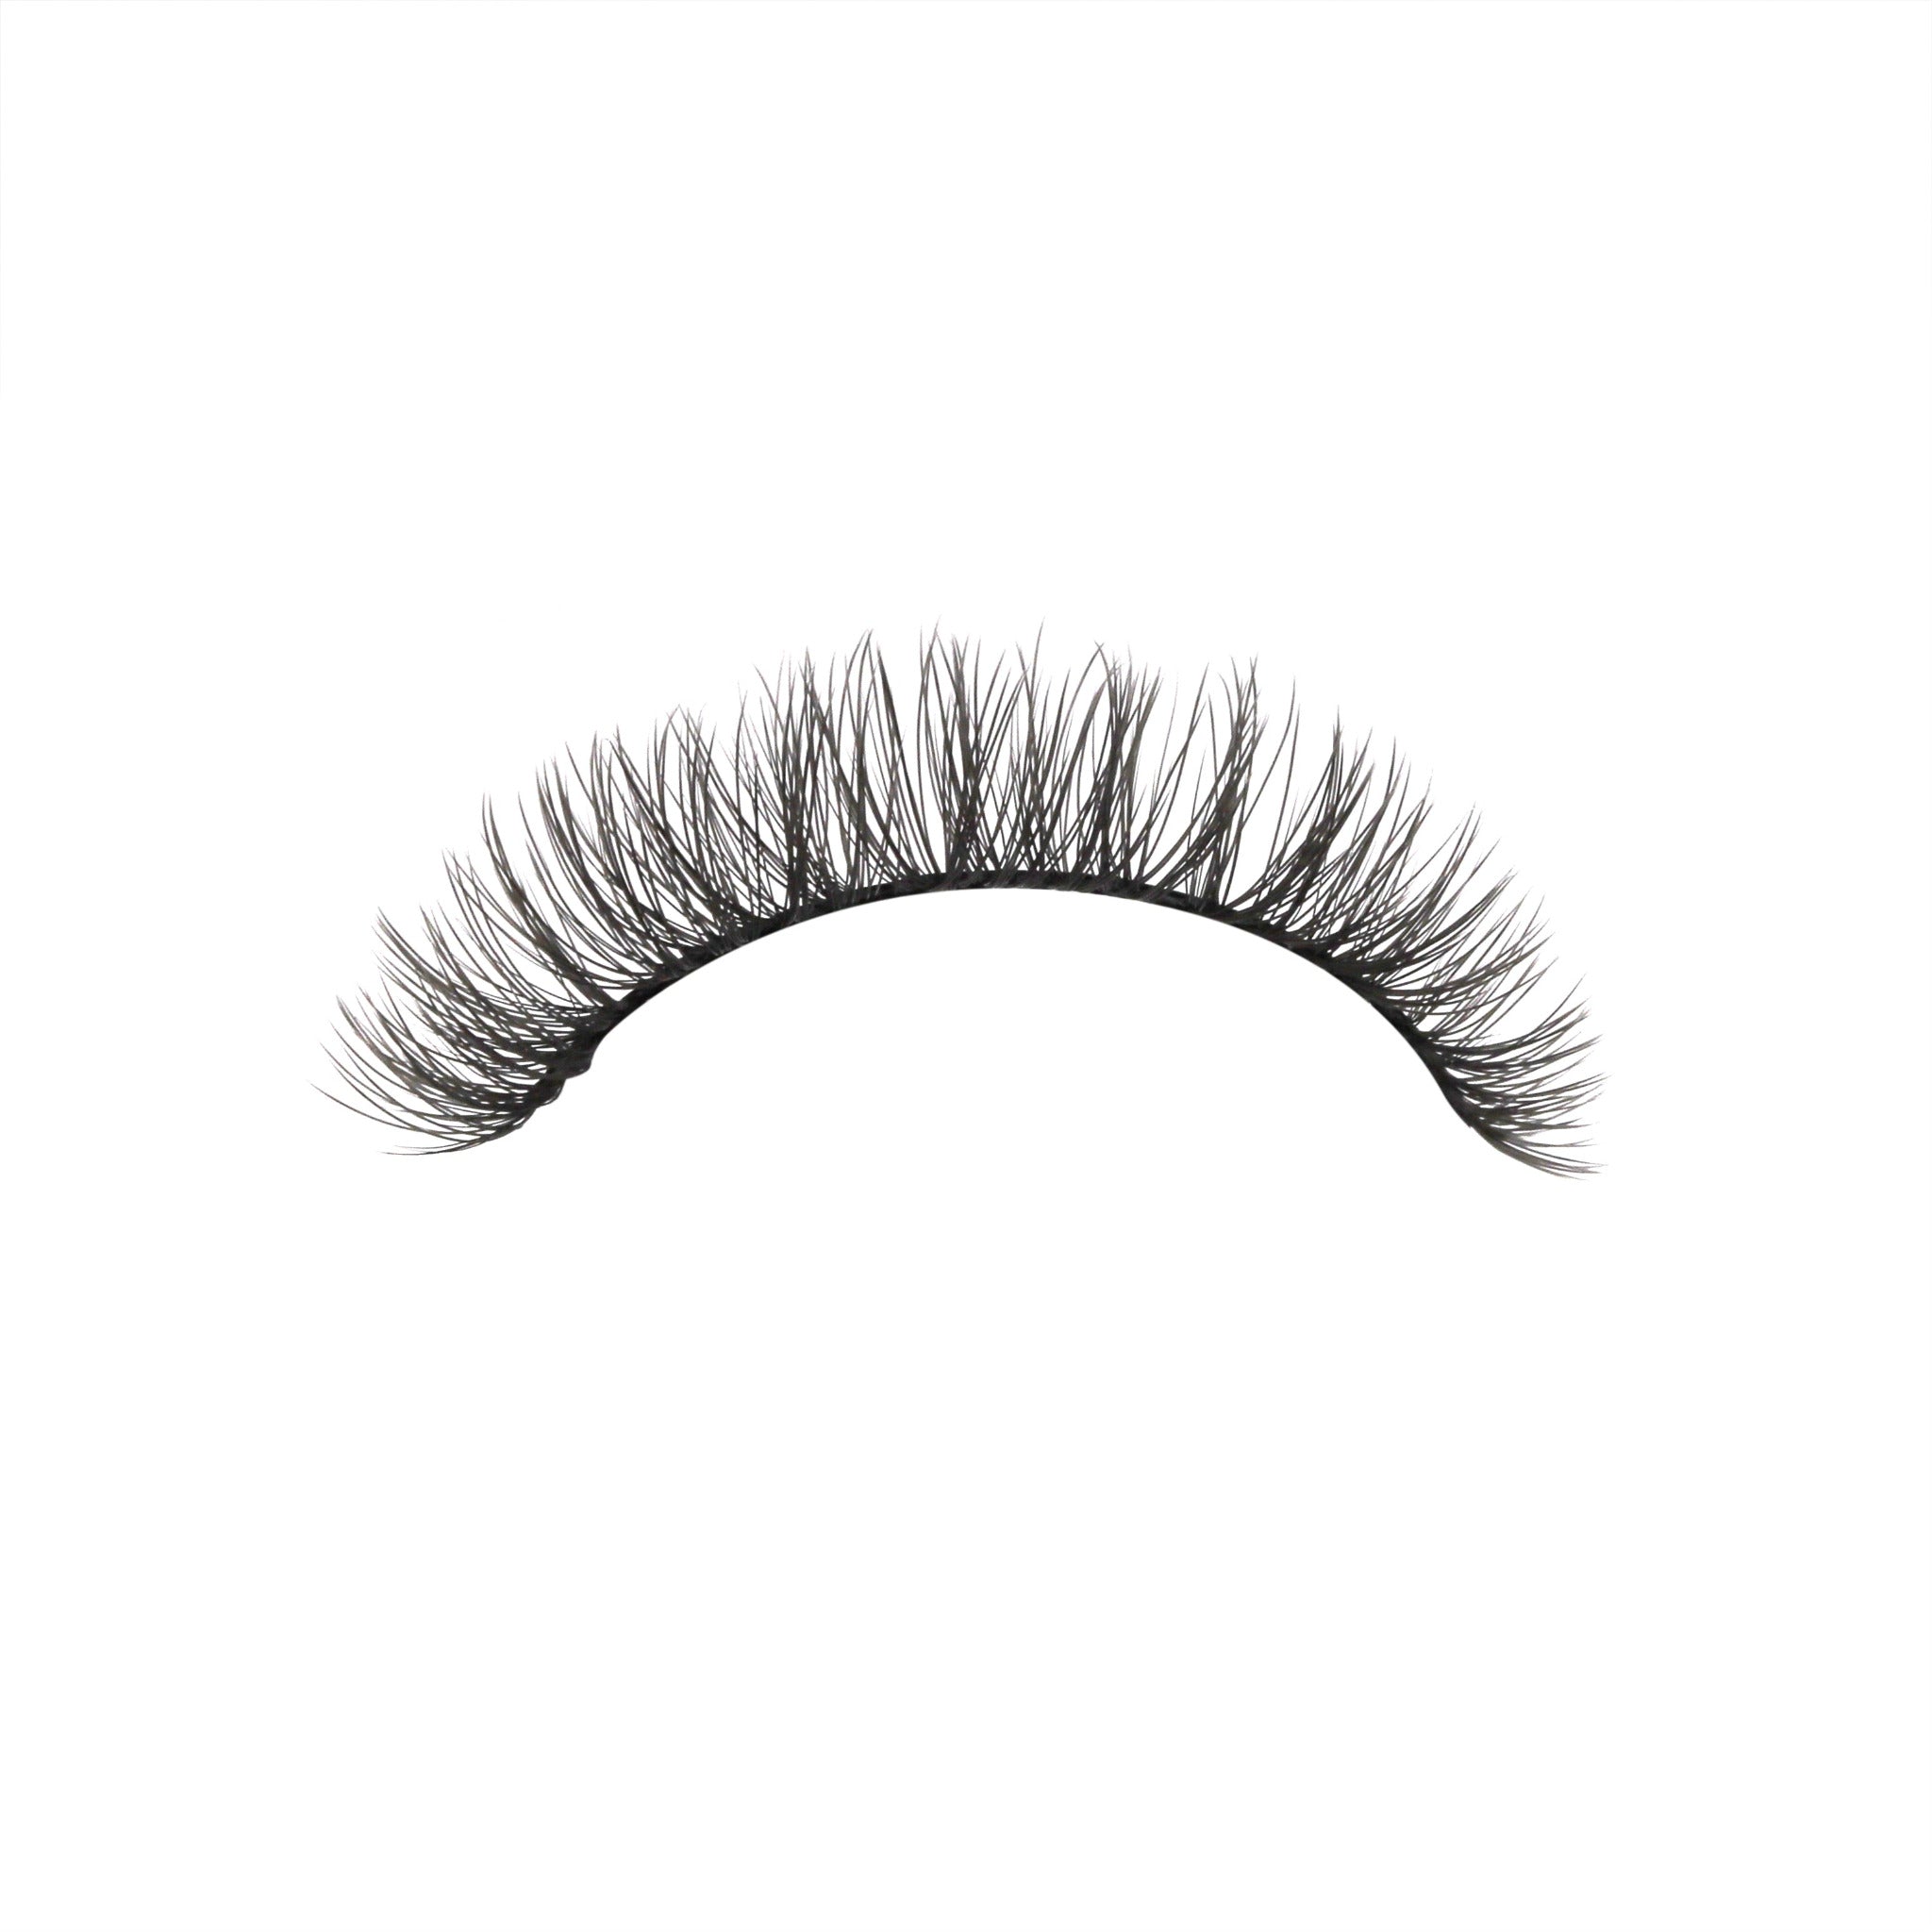 strip lashes, false eyelashes, natural strip lash look, high quality strip lashes, volume style strip lashes, luxurious strip lashes, Biodegradable lashes